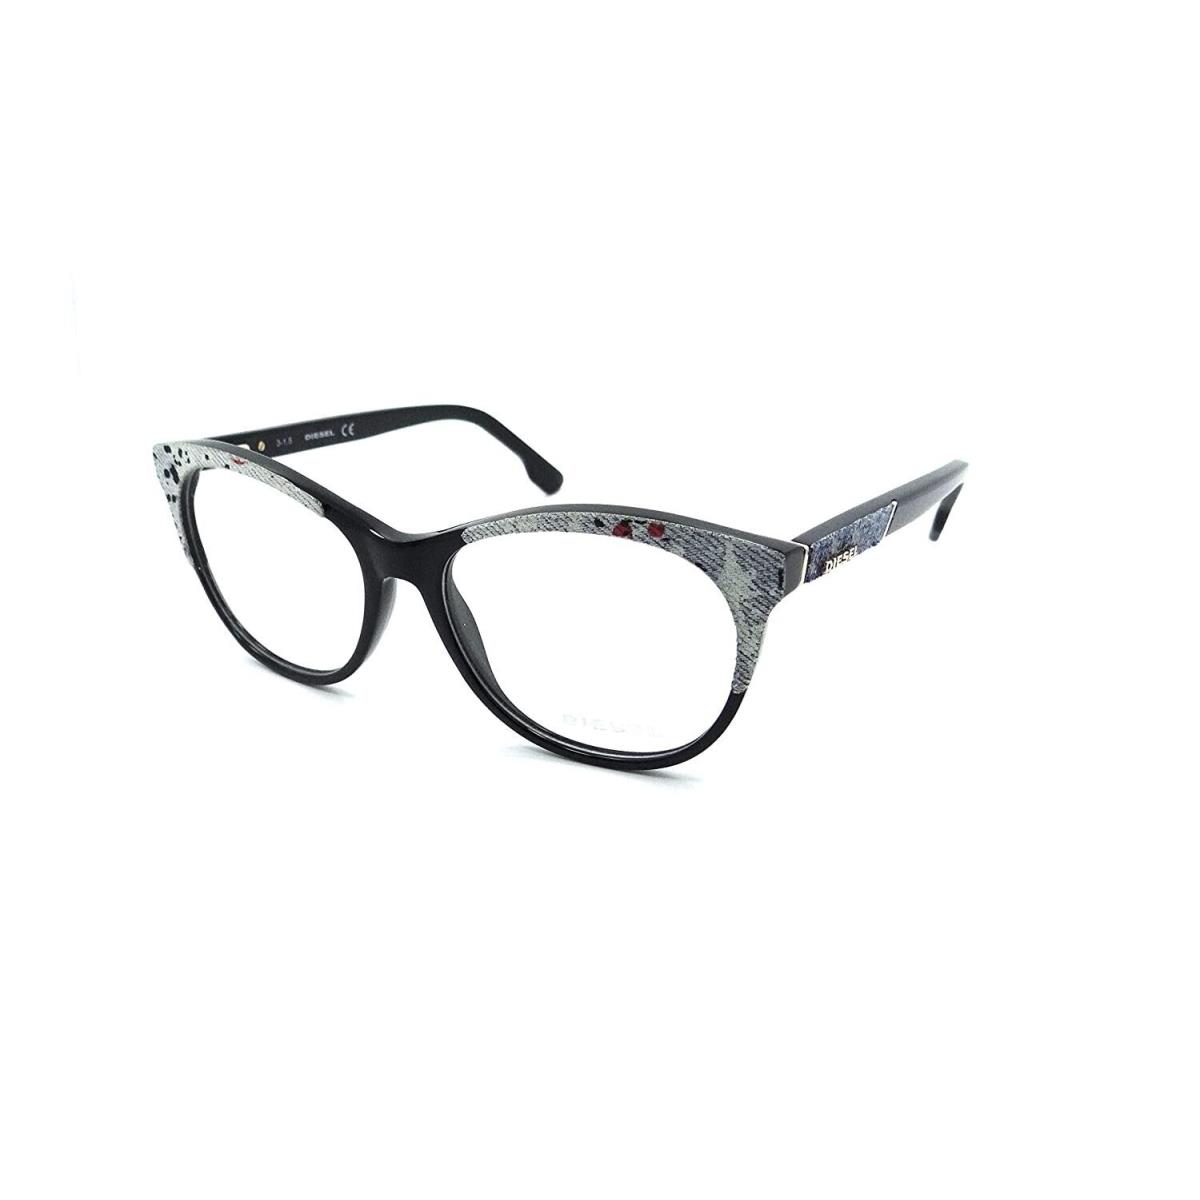 Diesel DL5155 005 Black Round Plastic Eyeglasses Frame 55-16-140 Denim Eye